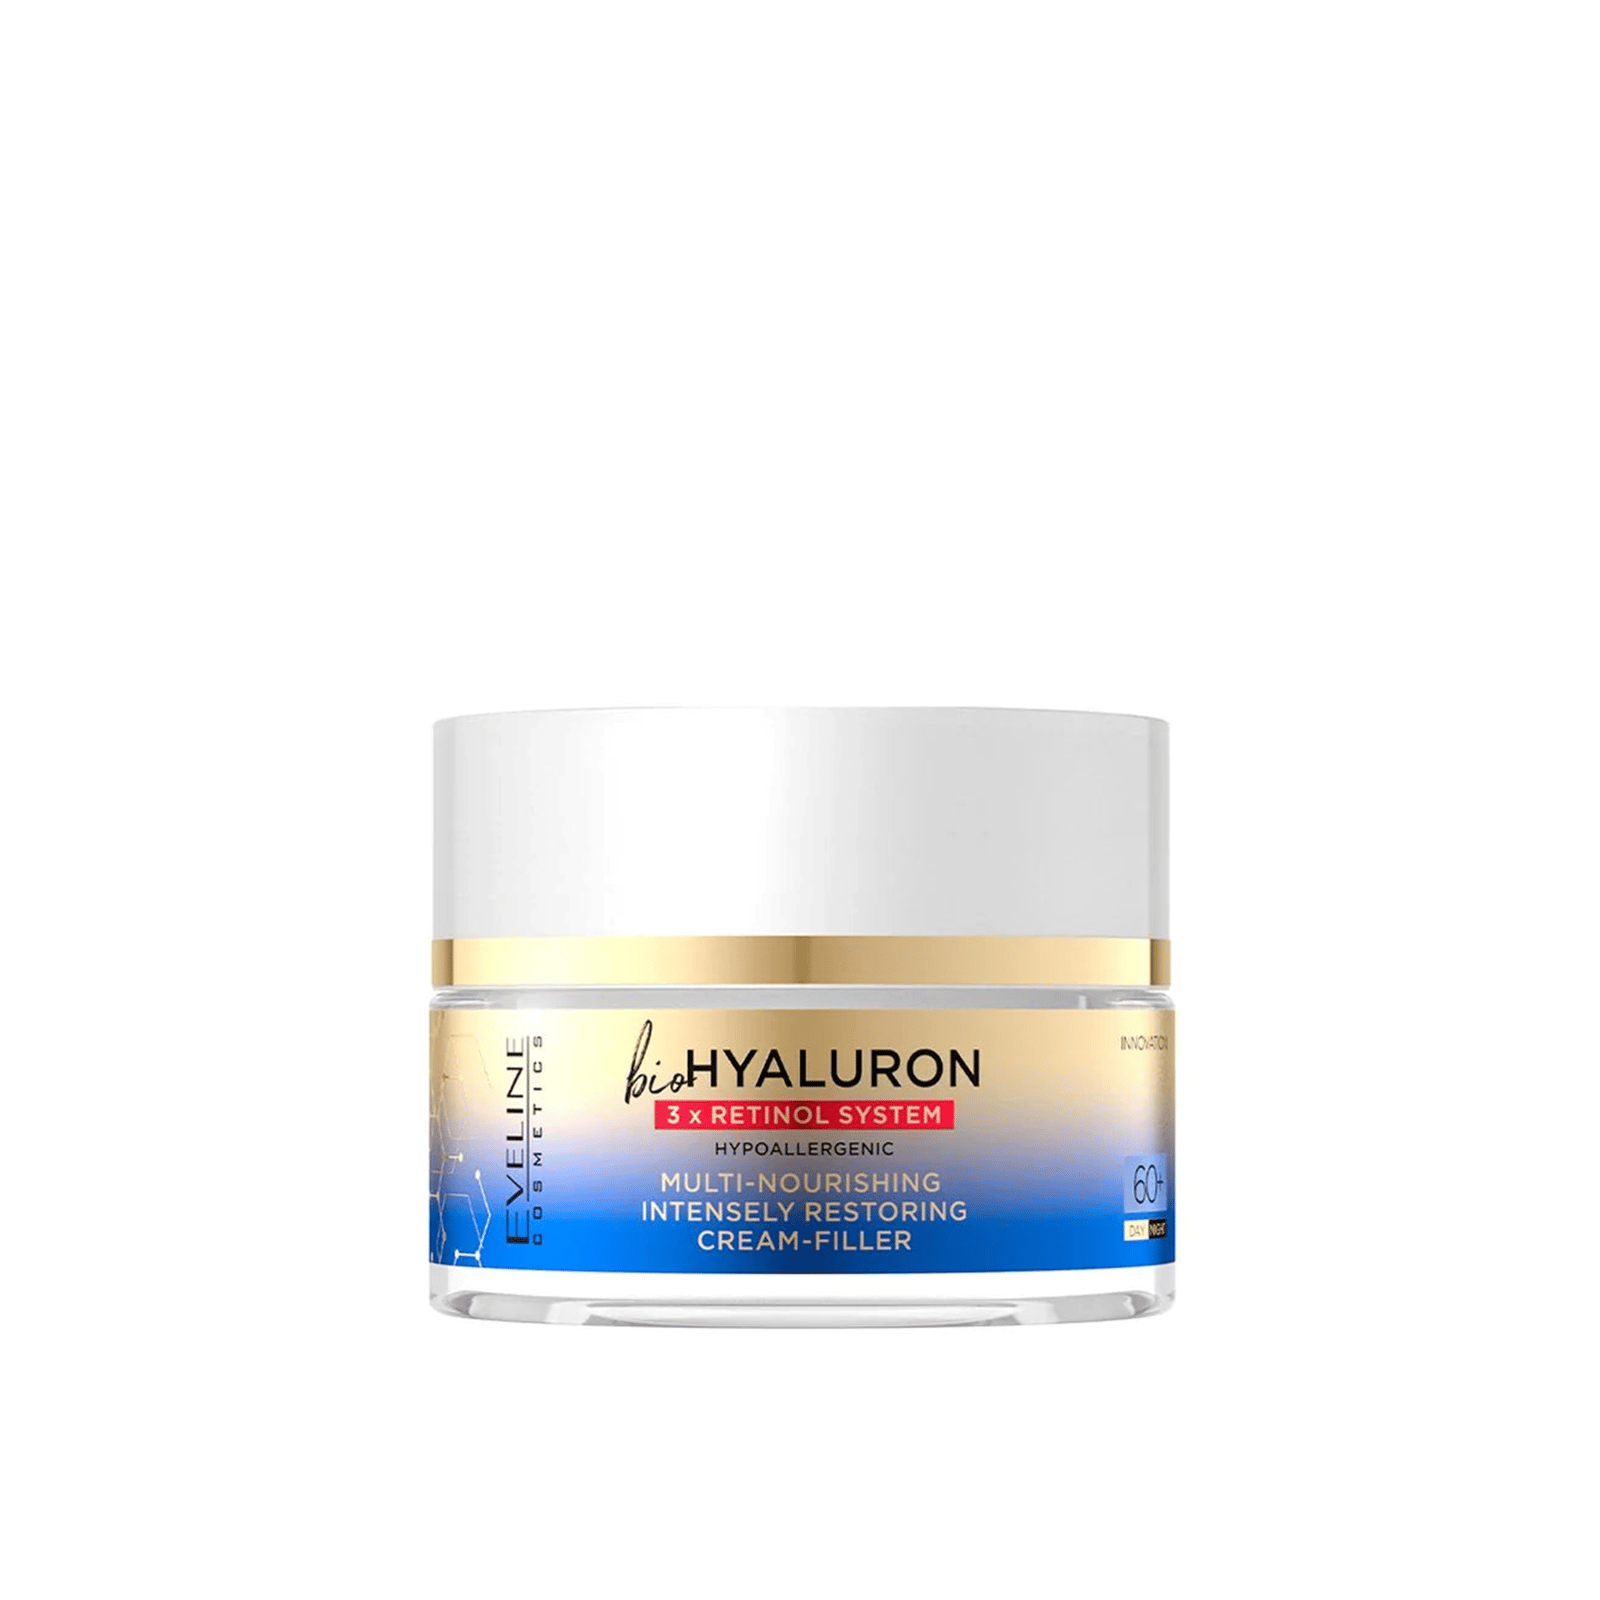 Eveline BioHyaluron 3x Retinol System 60+ Multi Nourishing Intensely Restoring Cream 50ml (1.76 fl oz)